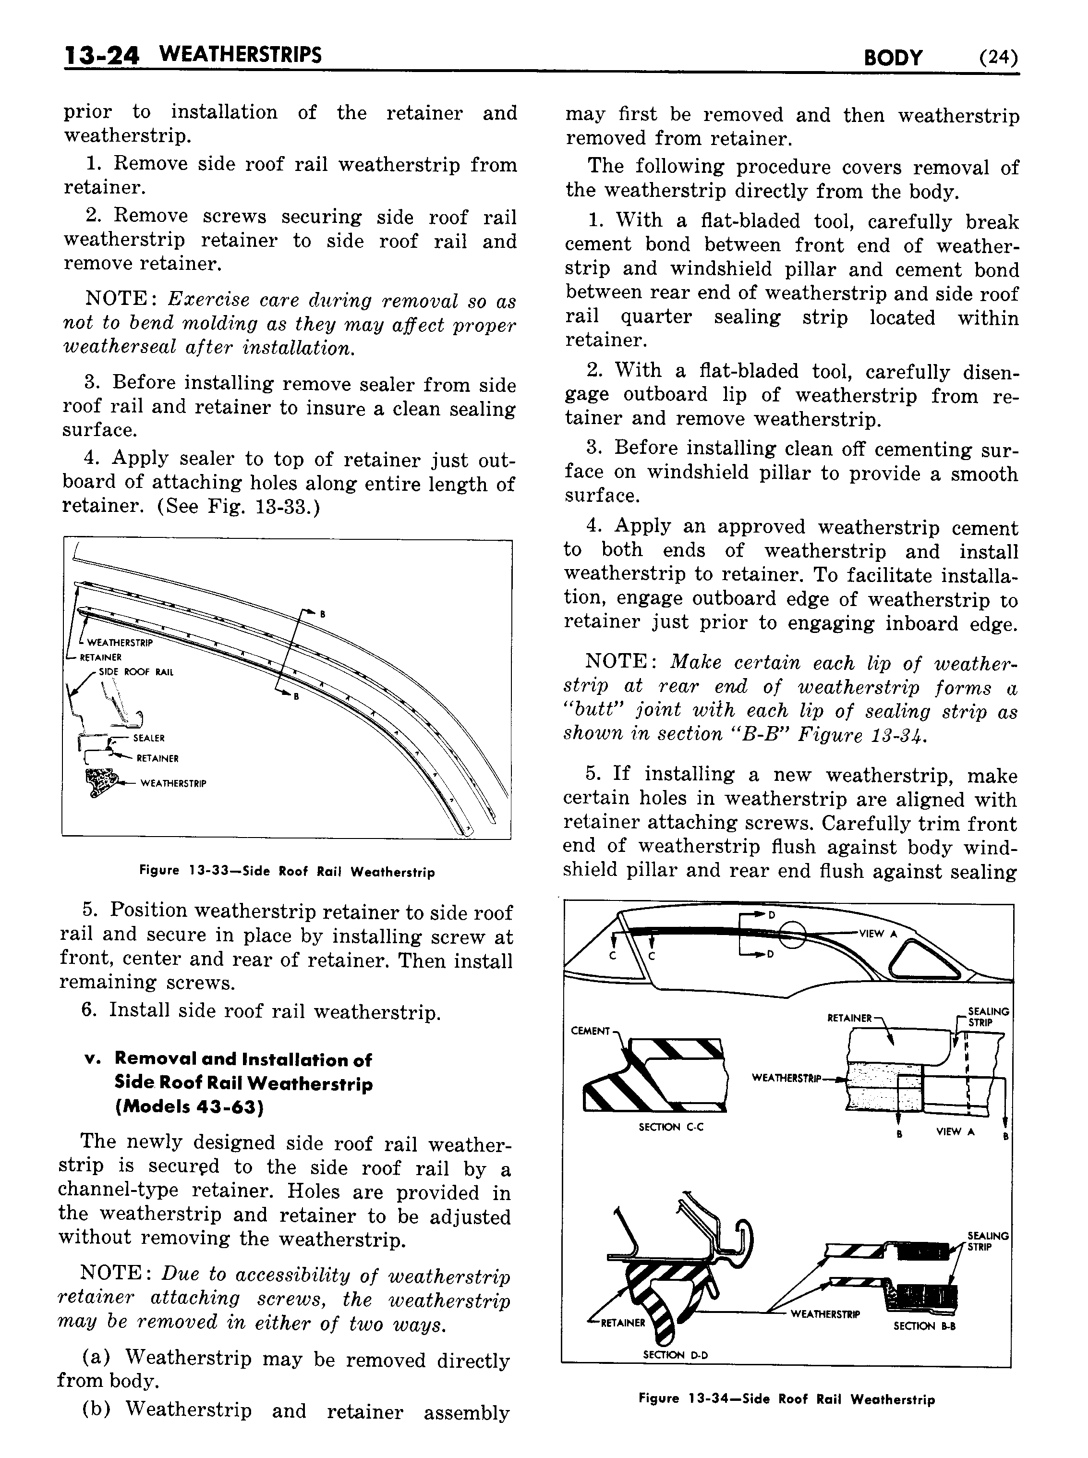 n_1957 Buick Body Service Manual-026-026.jpg